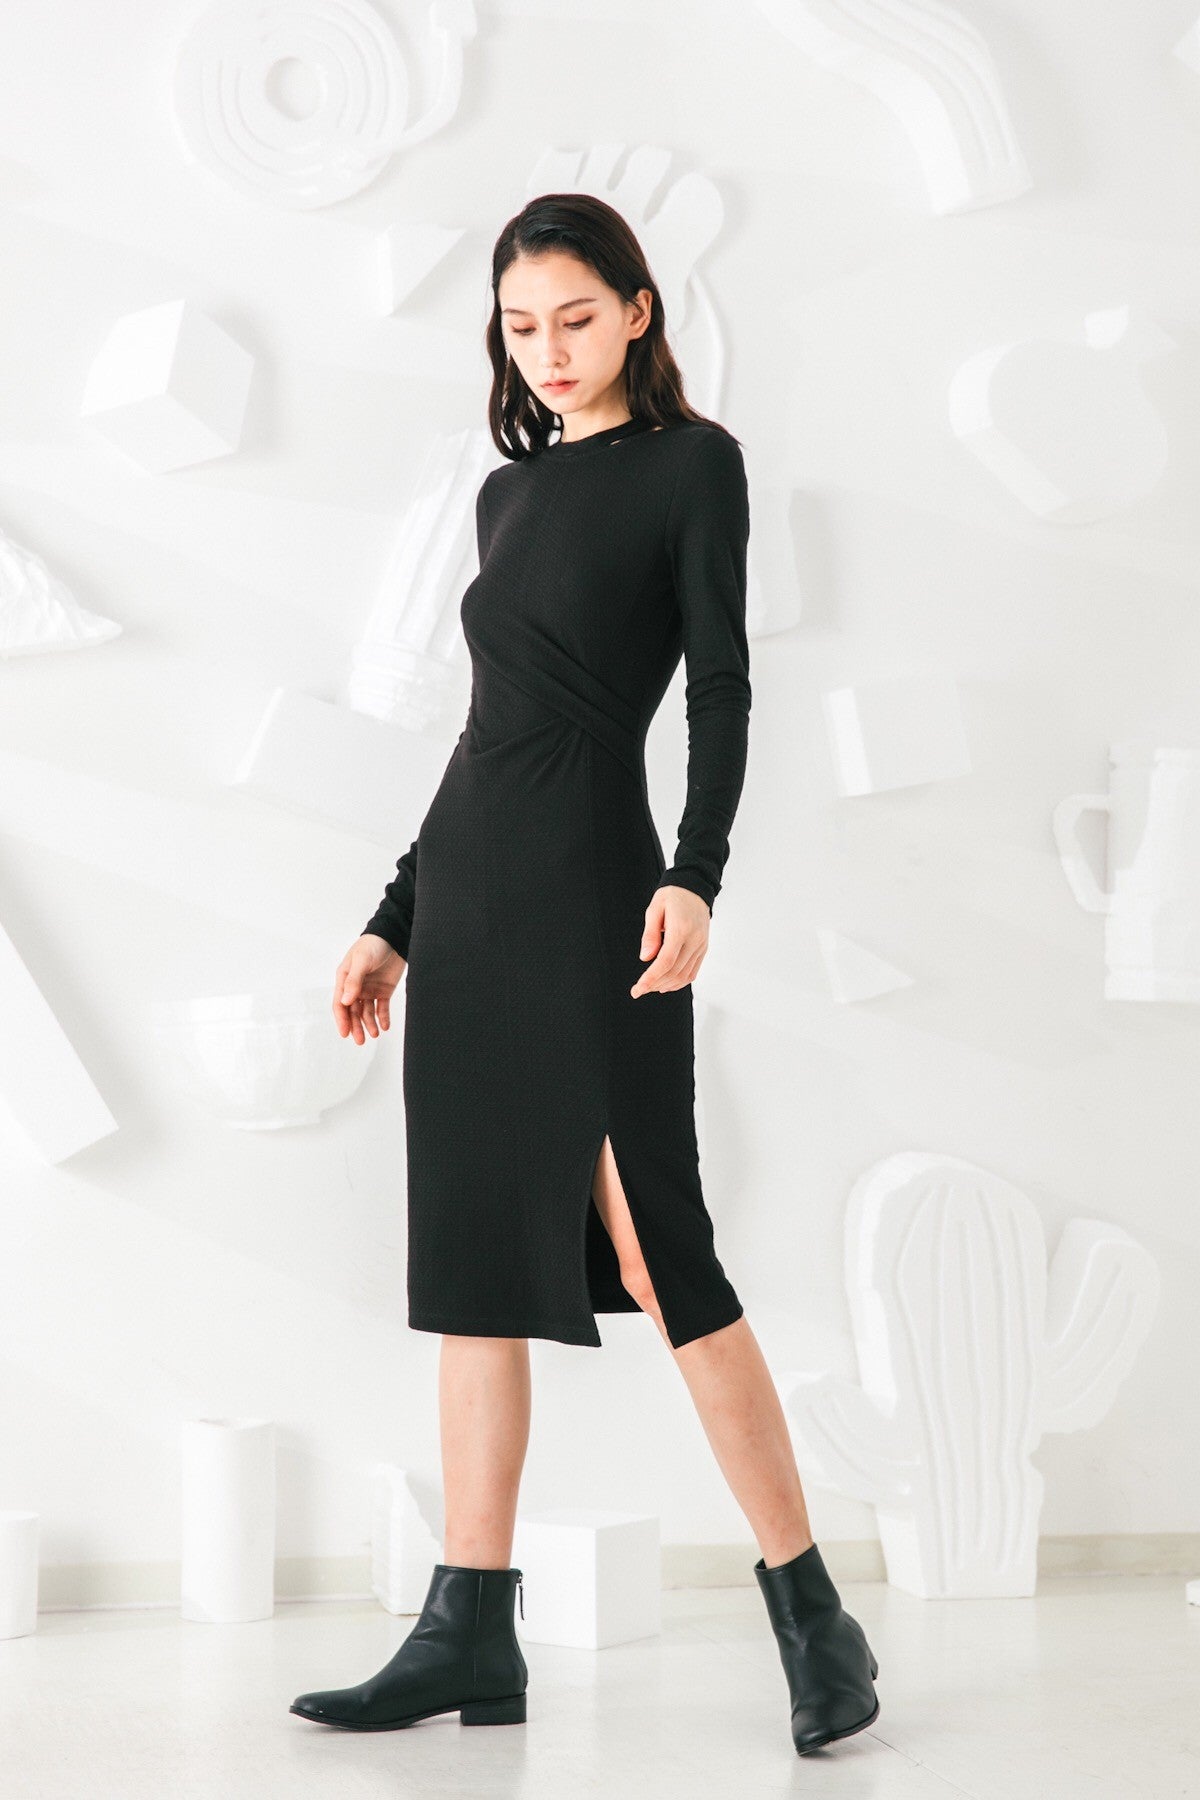 SKYE San Francisco SF shop ethical modern minimalist quality women clothing fashion Mélanie Dress black 5